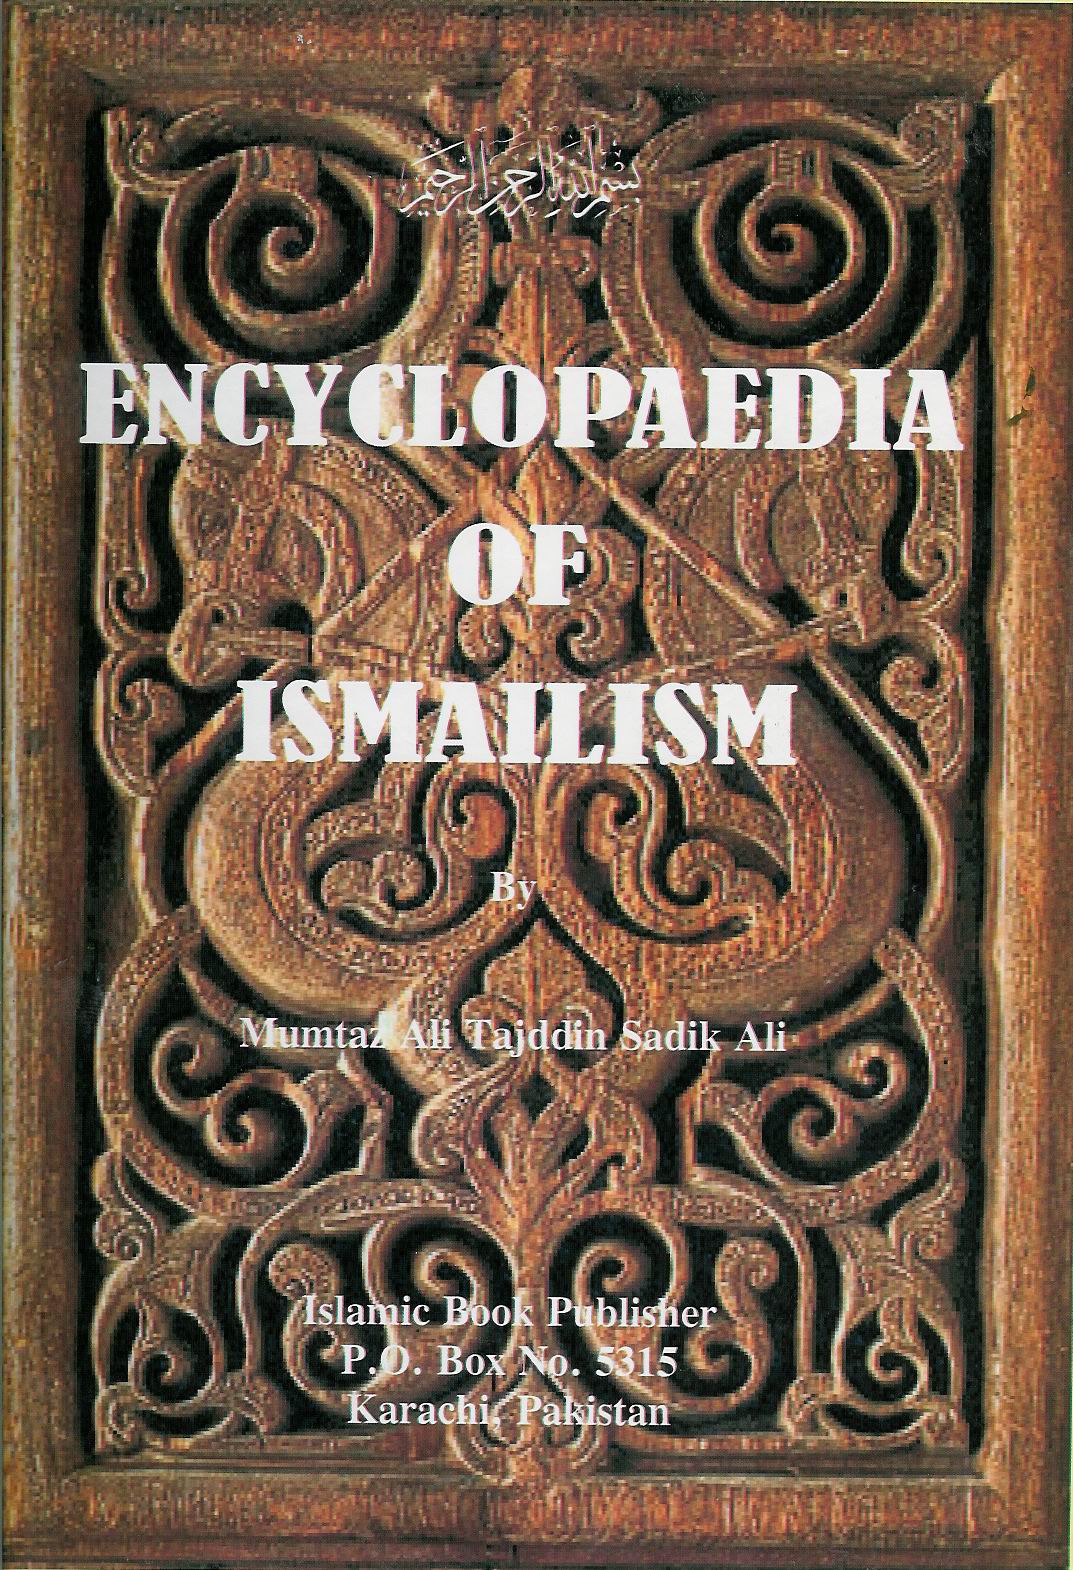 2006-Encyclopaedia-Image-15